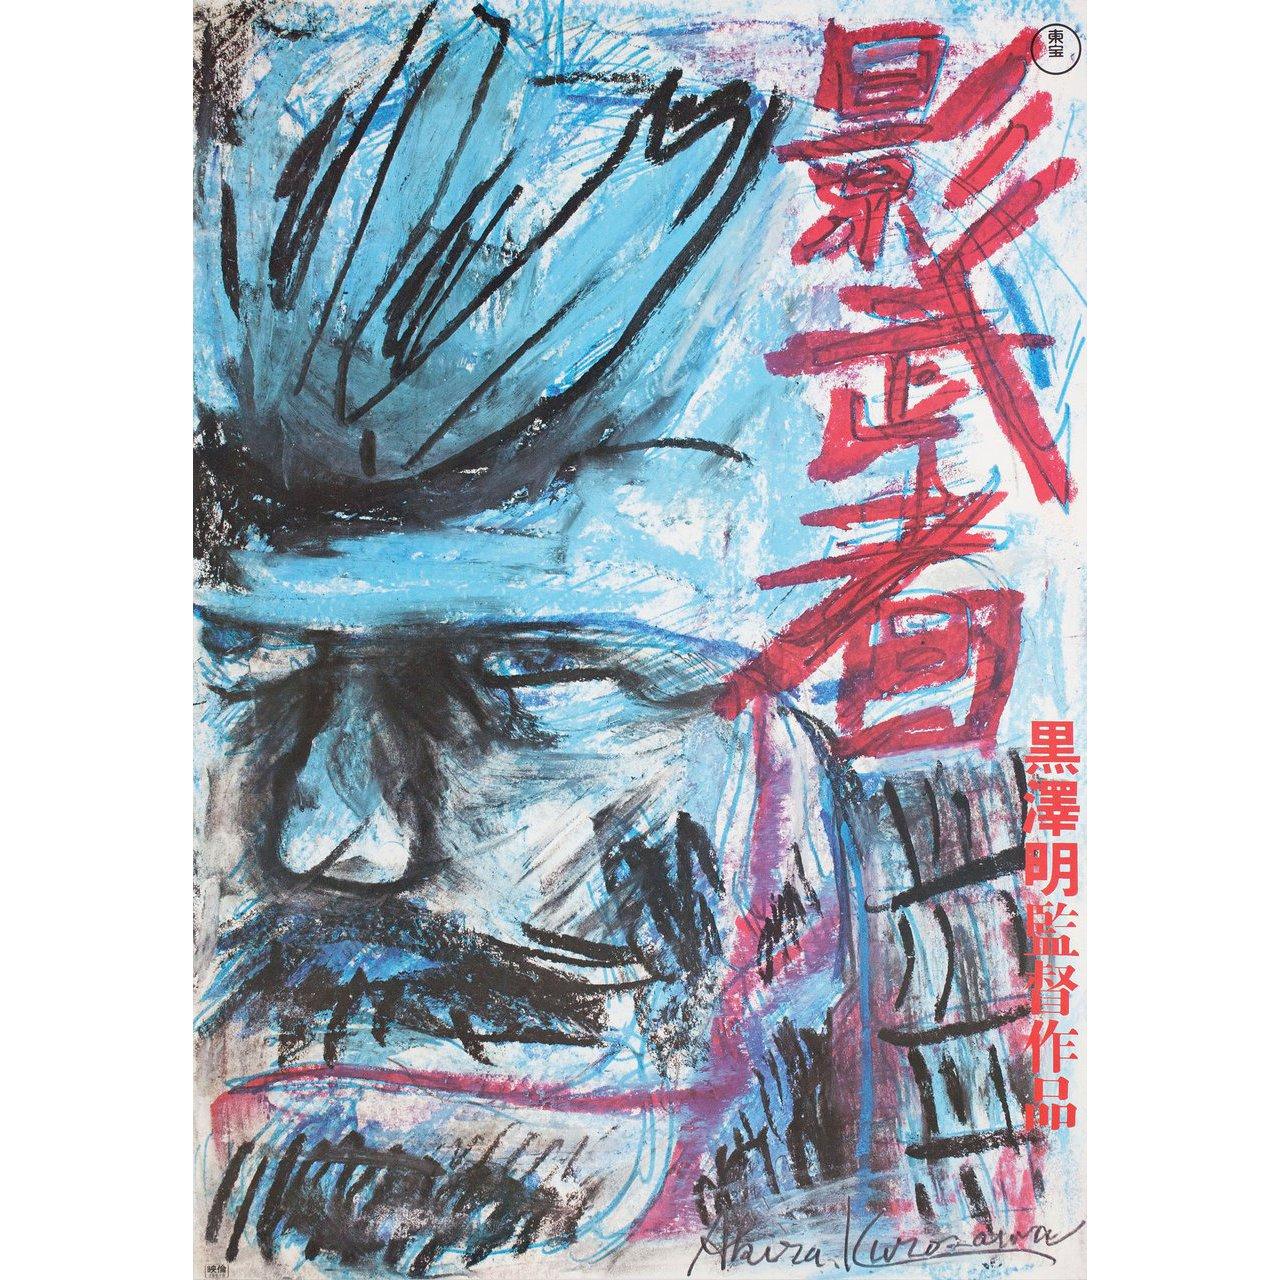 Original 1980 Japanese B2 poster by Akira Kurosawa for the film Kagemusha directed by Akira Kurosawa with Tatsuya Nakadai / Tsutomu Yamazaki / Ken'ichi Hagiwara / Jinpachi Nezu. Fine condition, linen-backed. This poster has been professionally